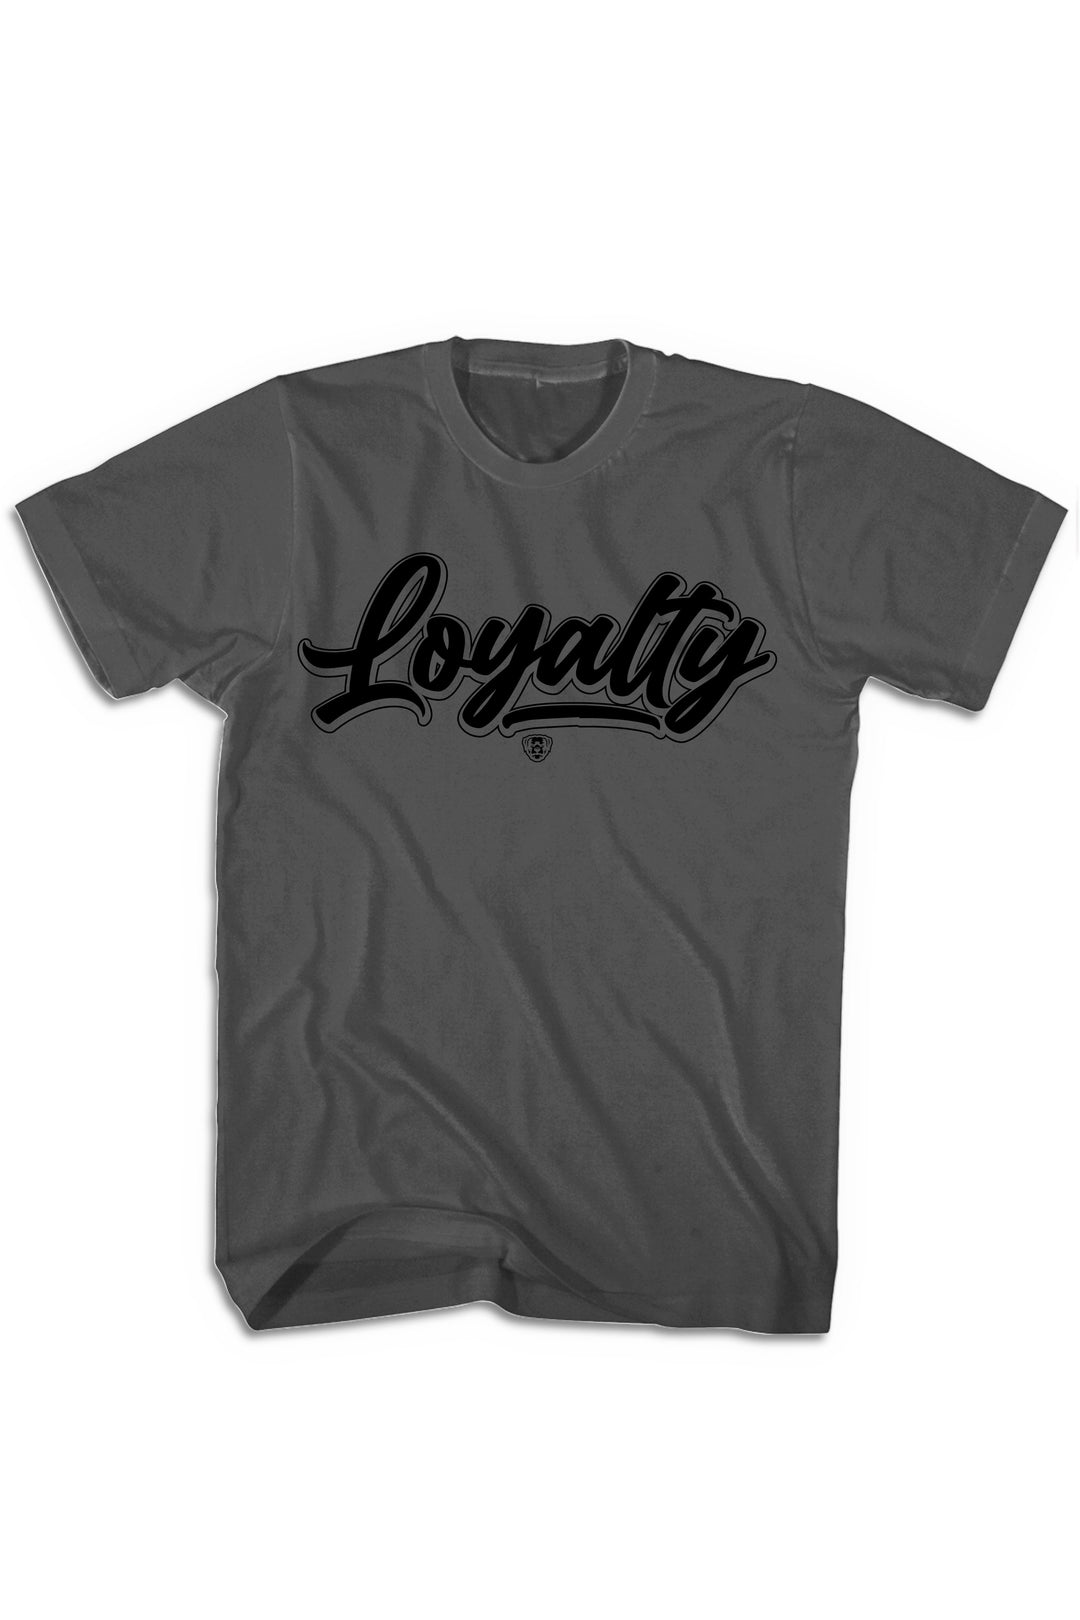 Loyalty Tee (Black Logo) - Zamage